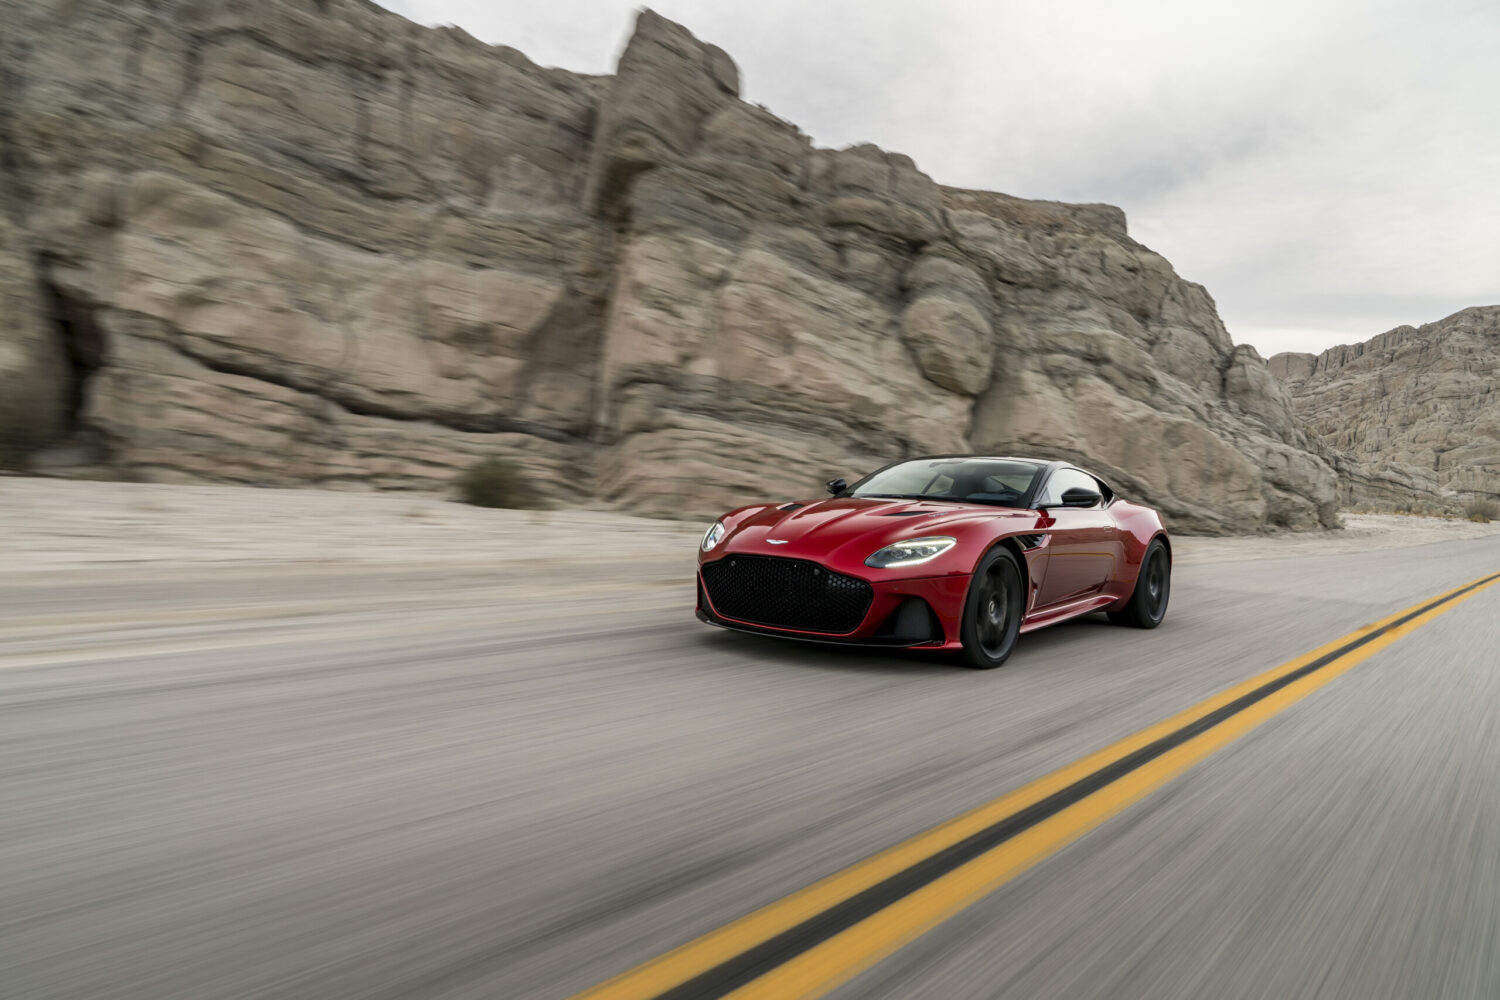 Unleash the Speed: Top 10 High-Performance Cars for Thrill-Seekers - Aston Martin DBS Superleggera